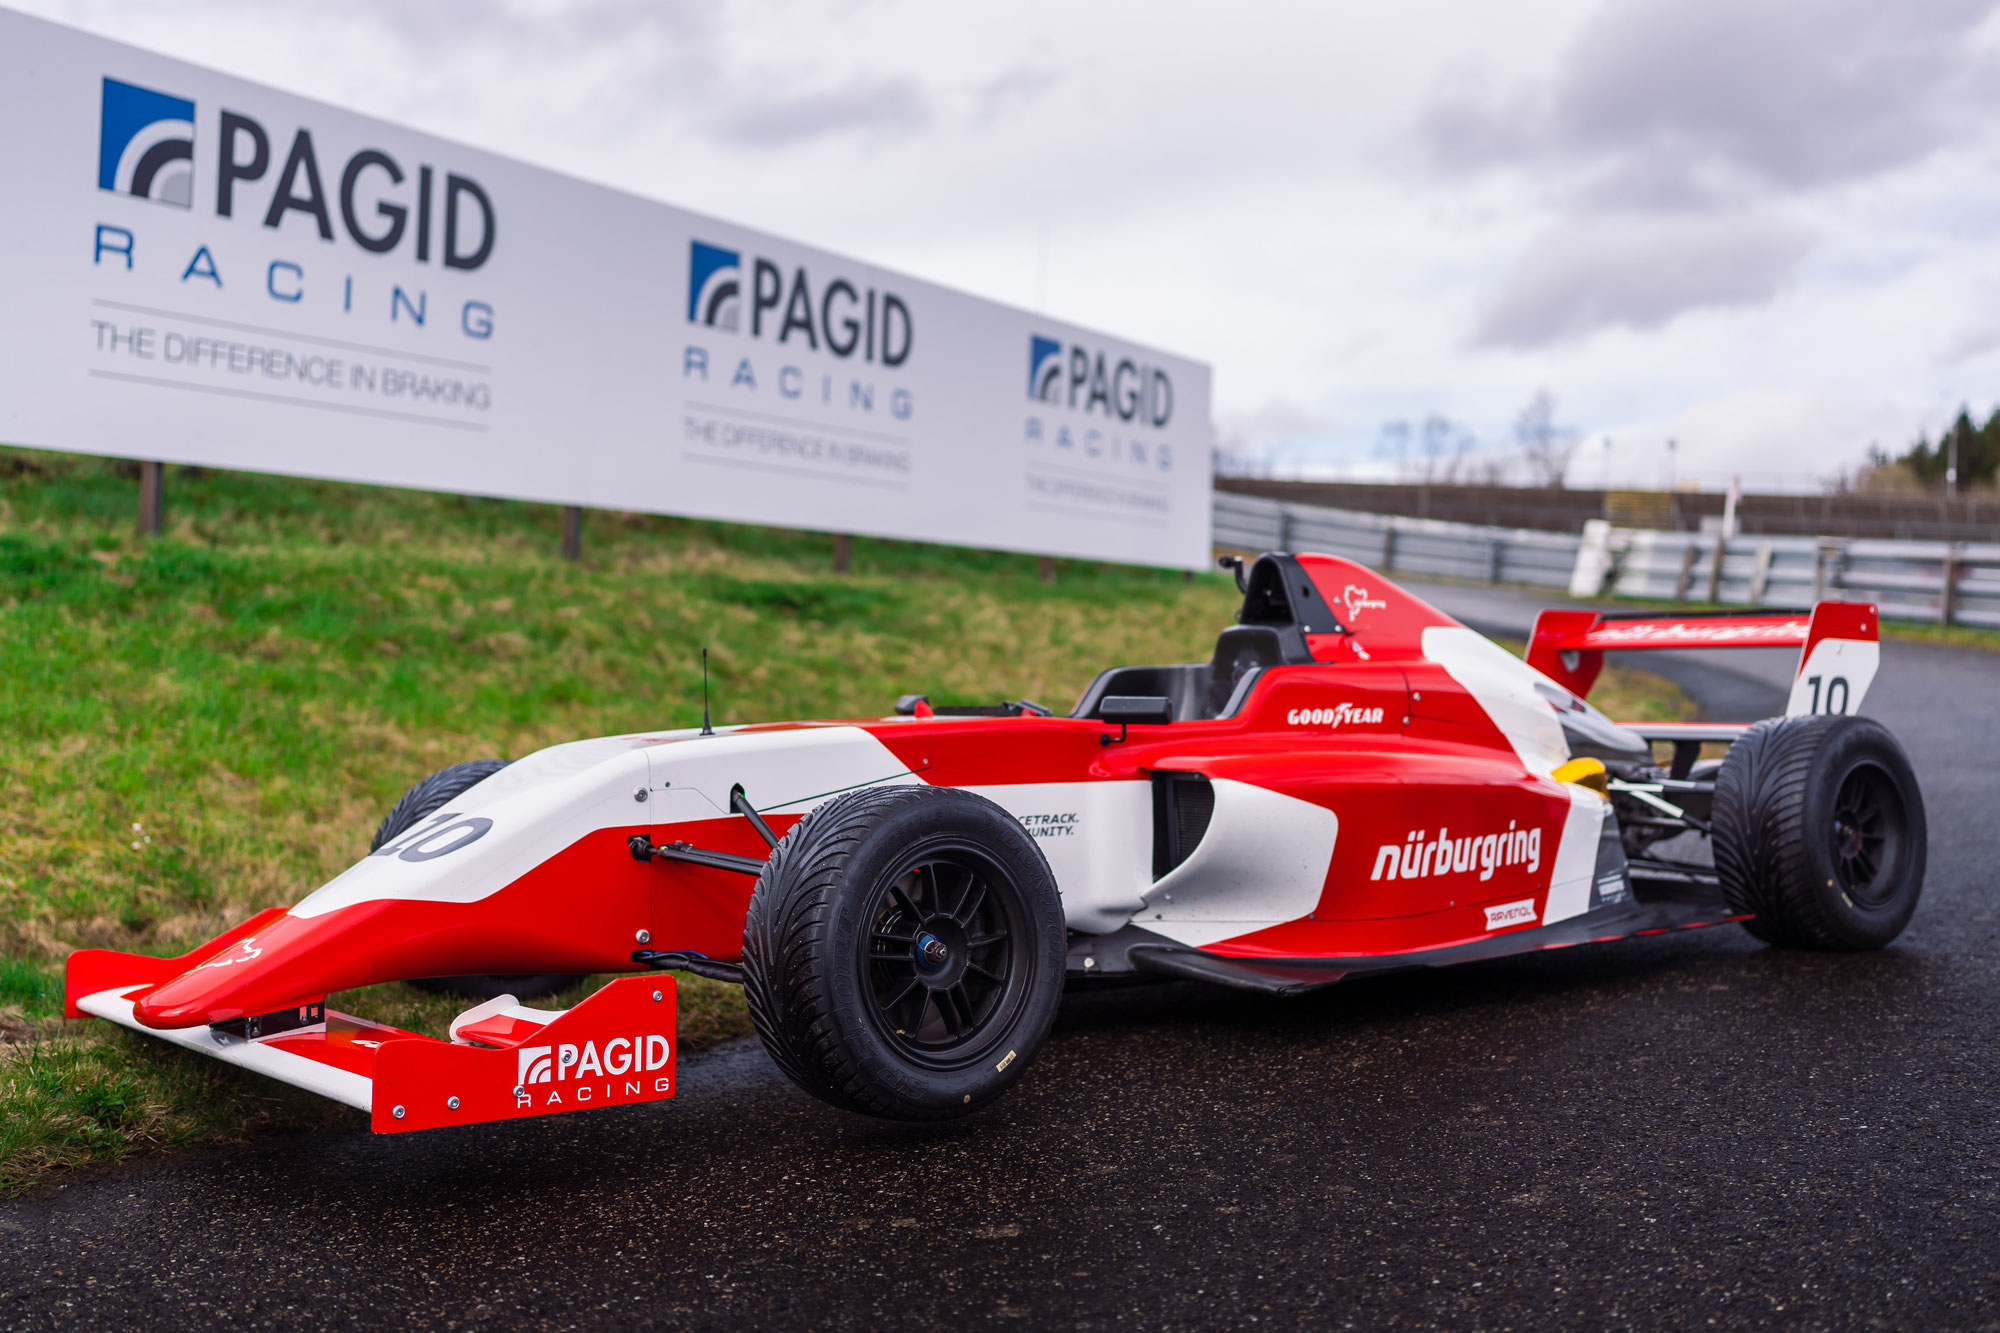 Neues Namensrecht an der Grand-Prix-Strecke: Rennteams fahren ab sofort durch die PAGID Racing Kurve